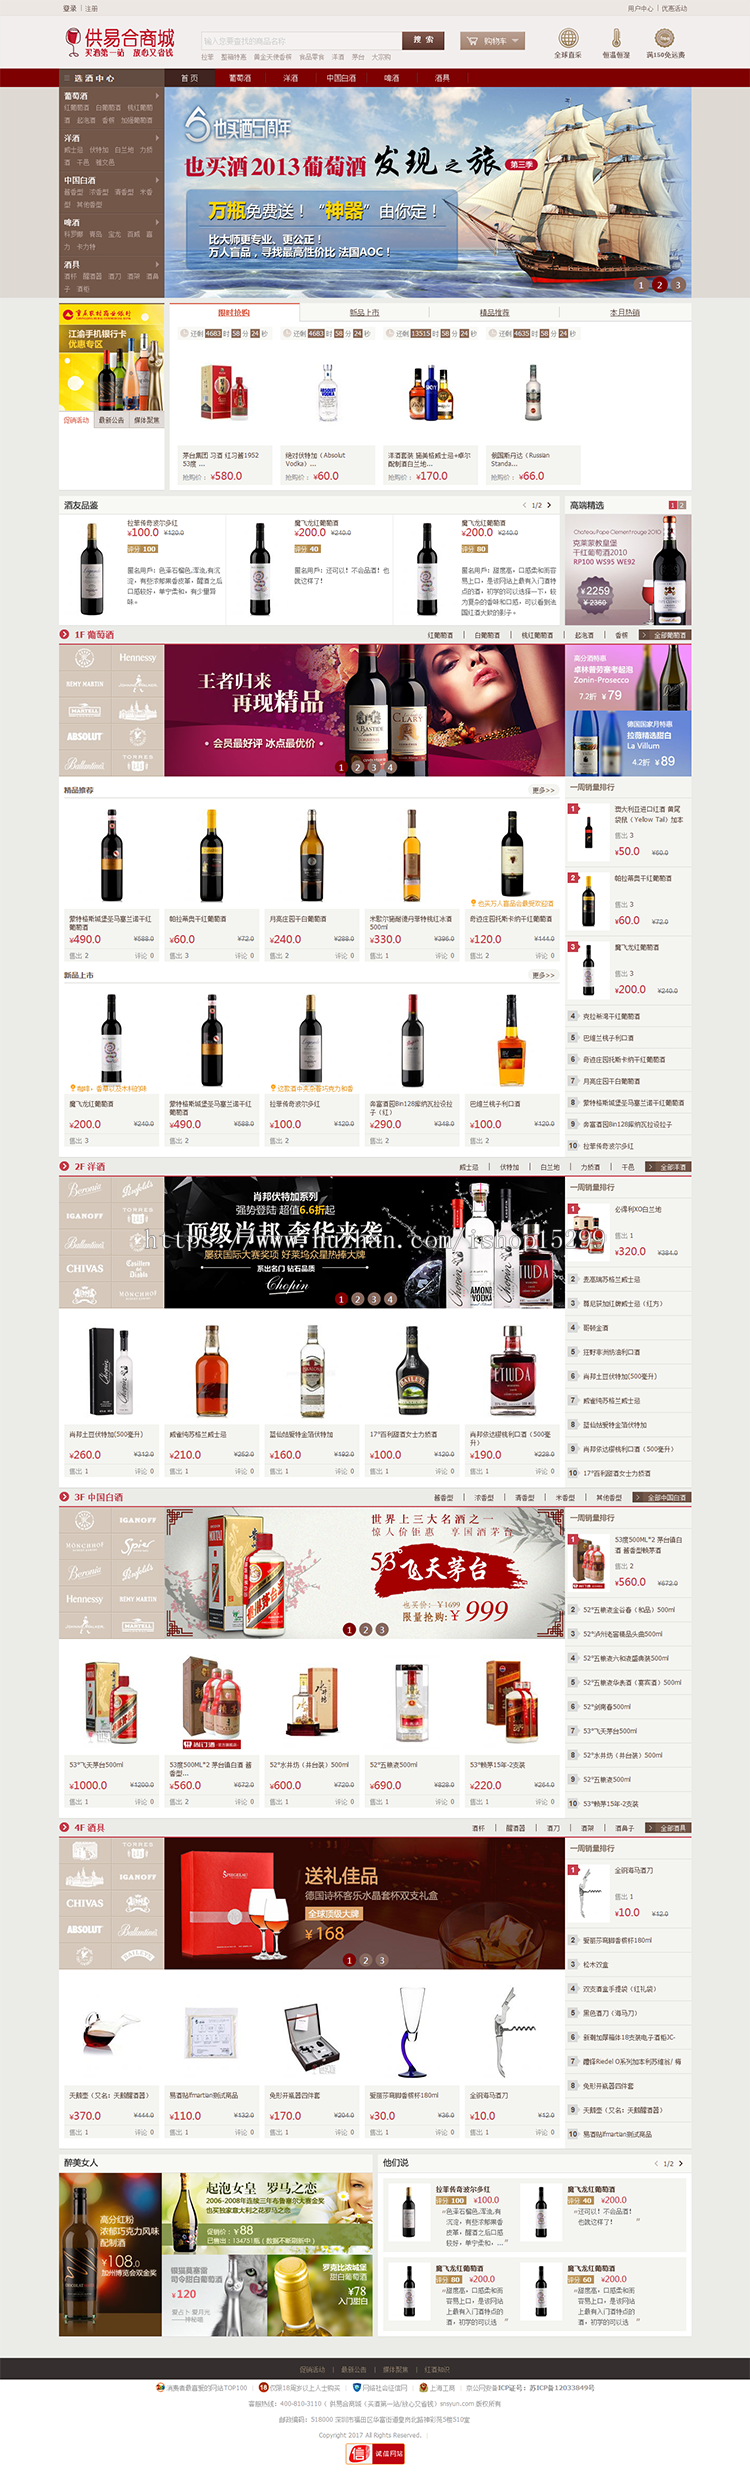 ecshop酒水饮料白酒洋酒葡萄酒商城源码带整站数据内容 